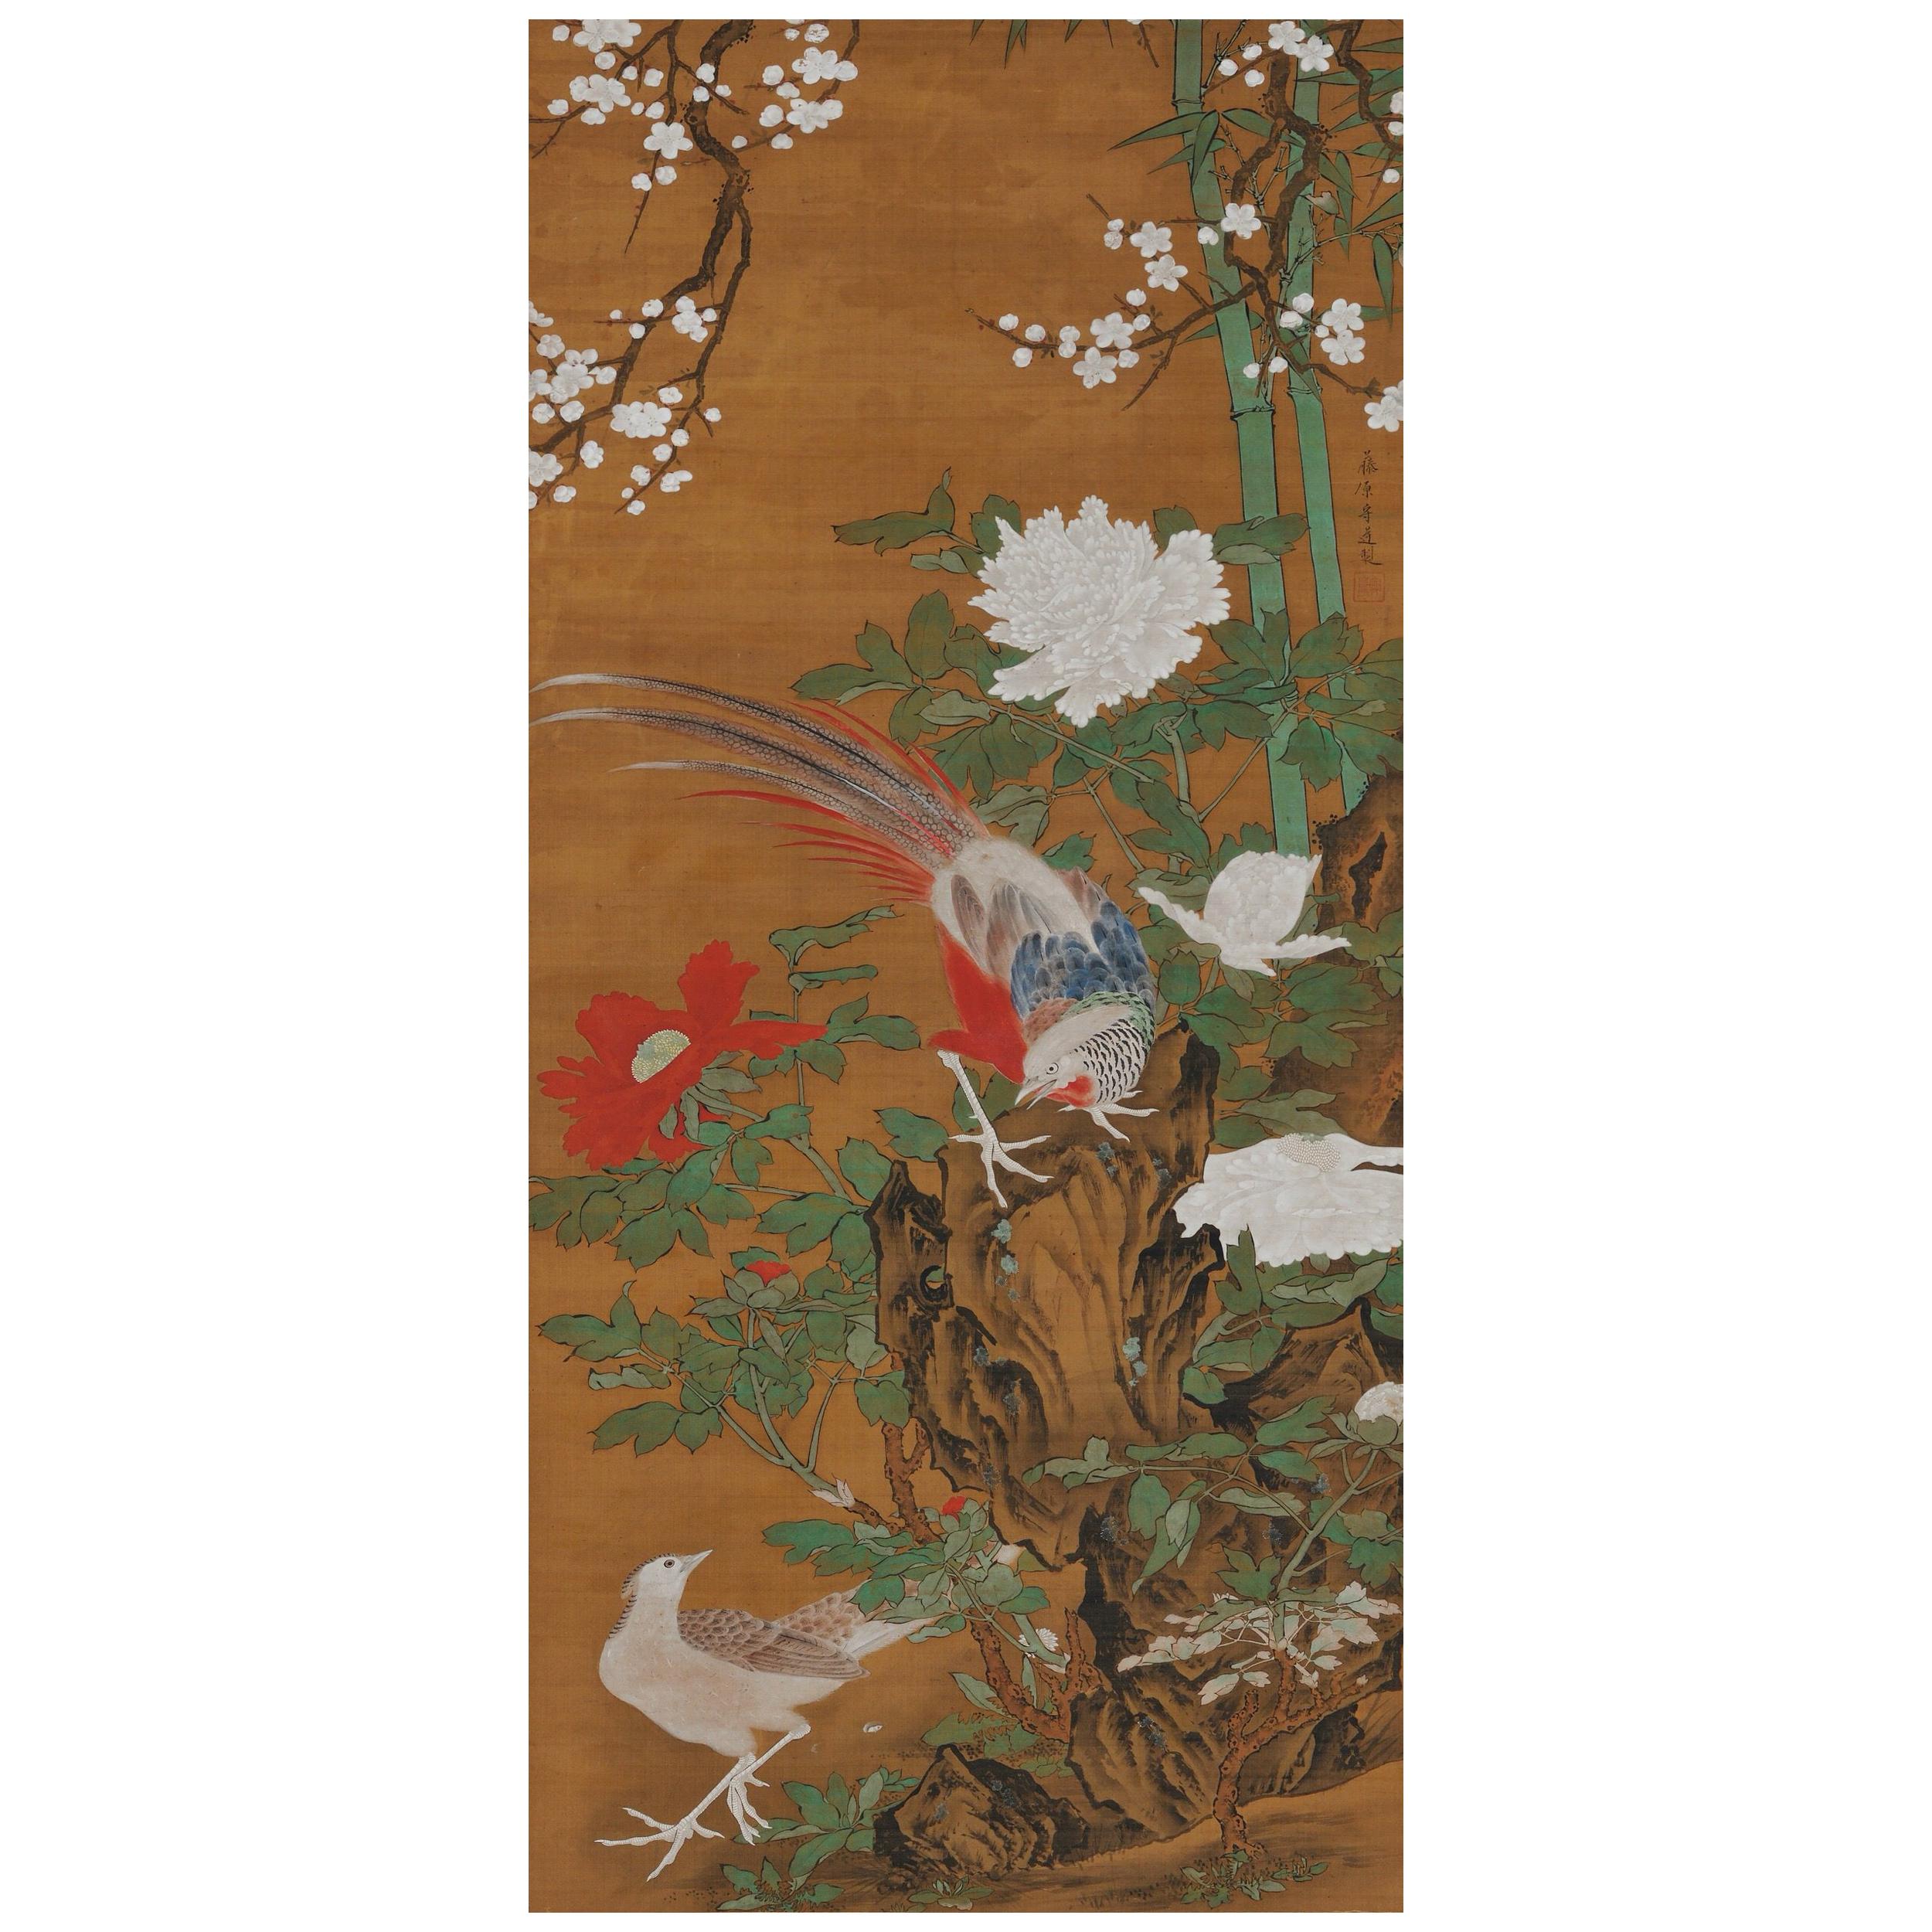 Japanese Flower and Bird Scroll Painting by Kano Tanshin Morimichi, circa 1815